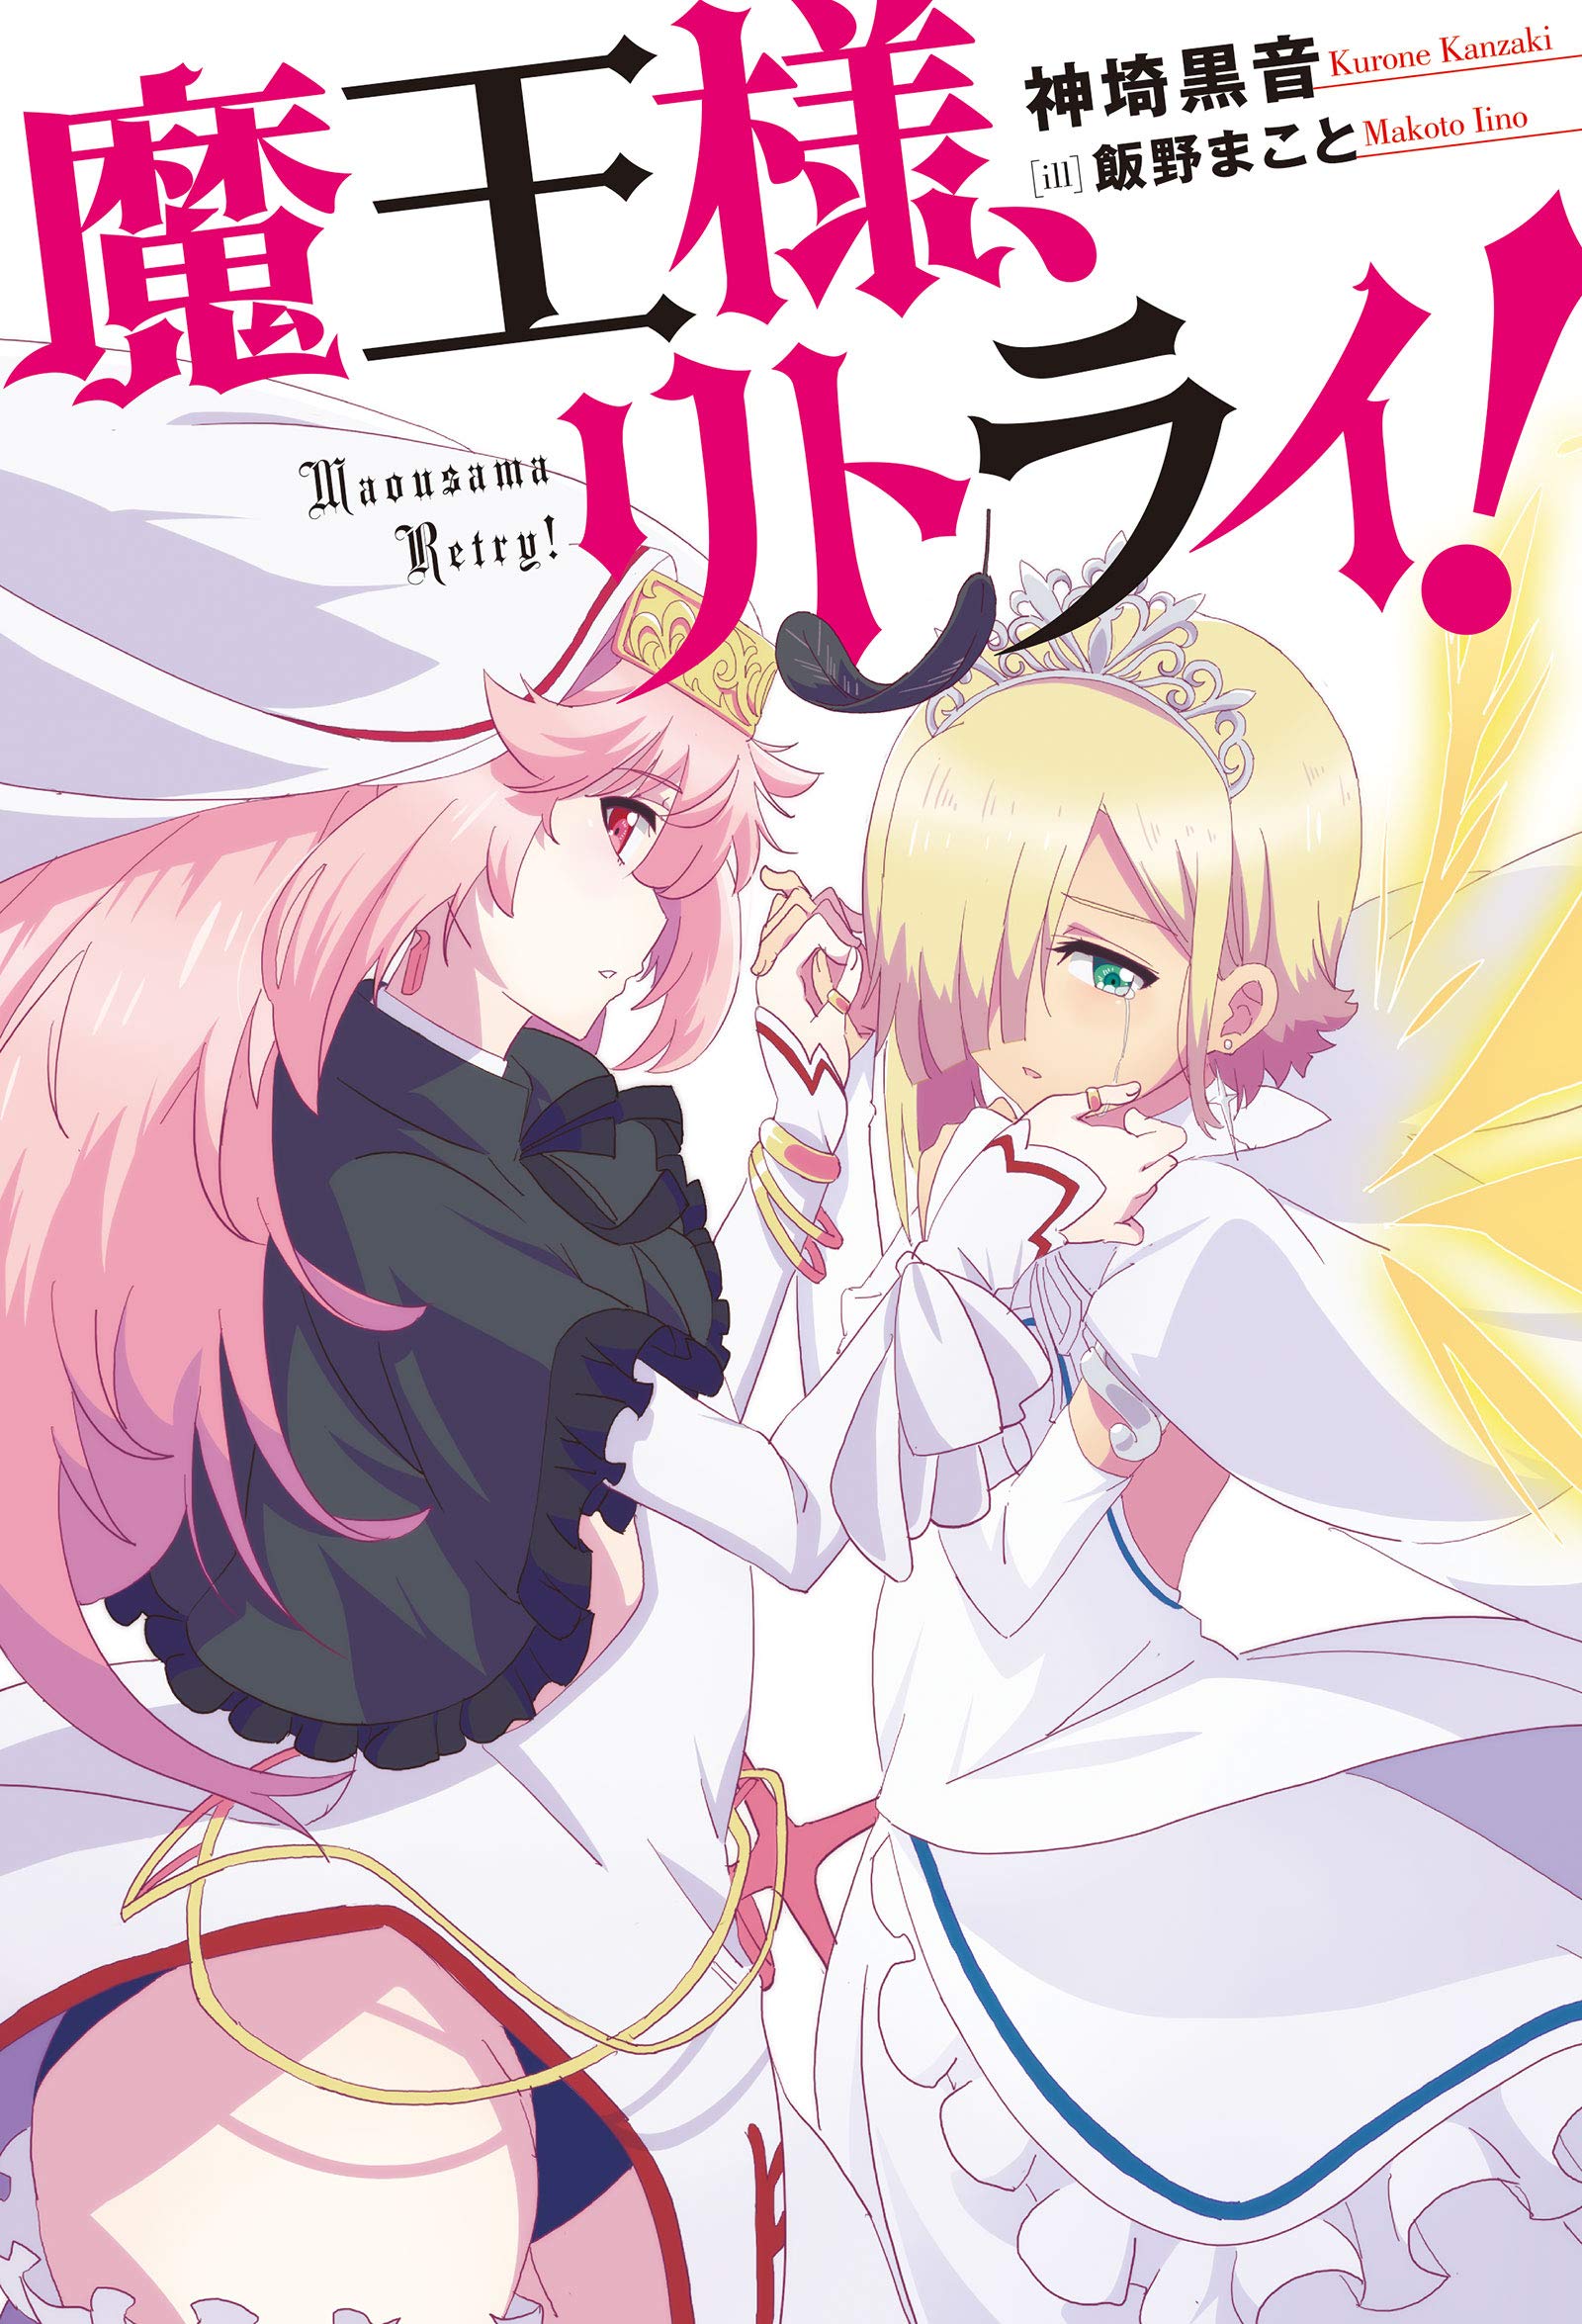 Maou-sama, Retry!(Light Novel), Demon Lord, Retry! Wiki